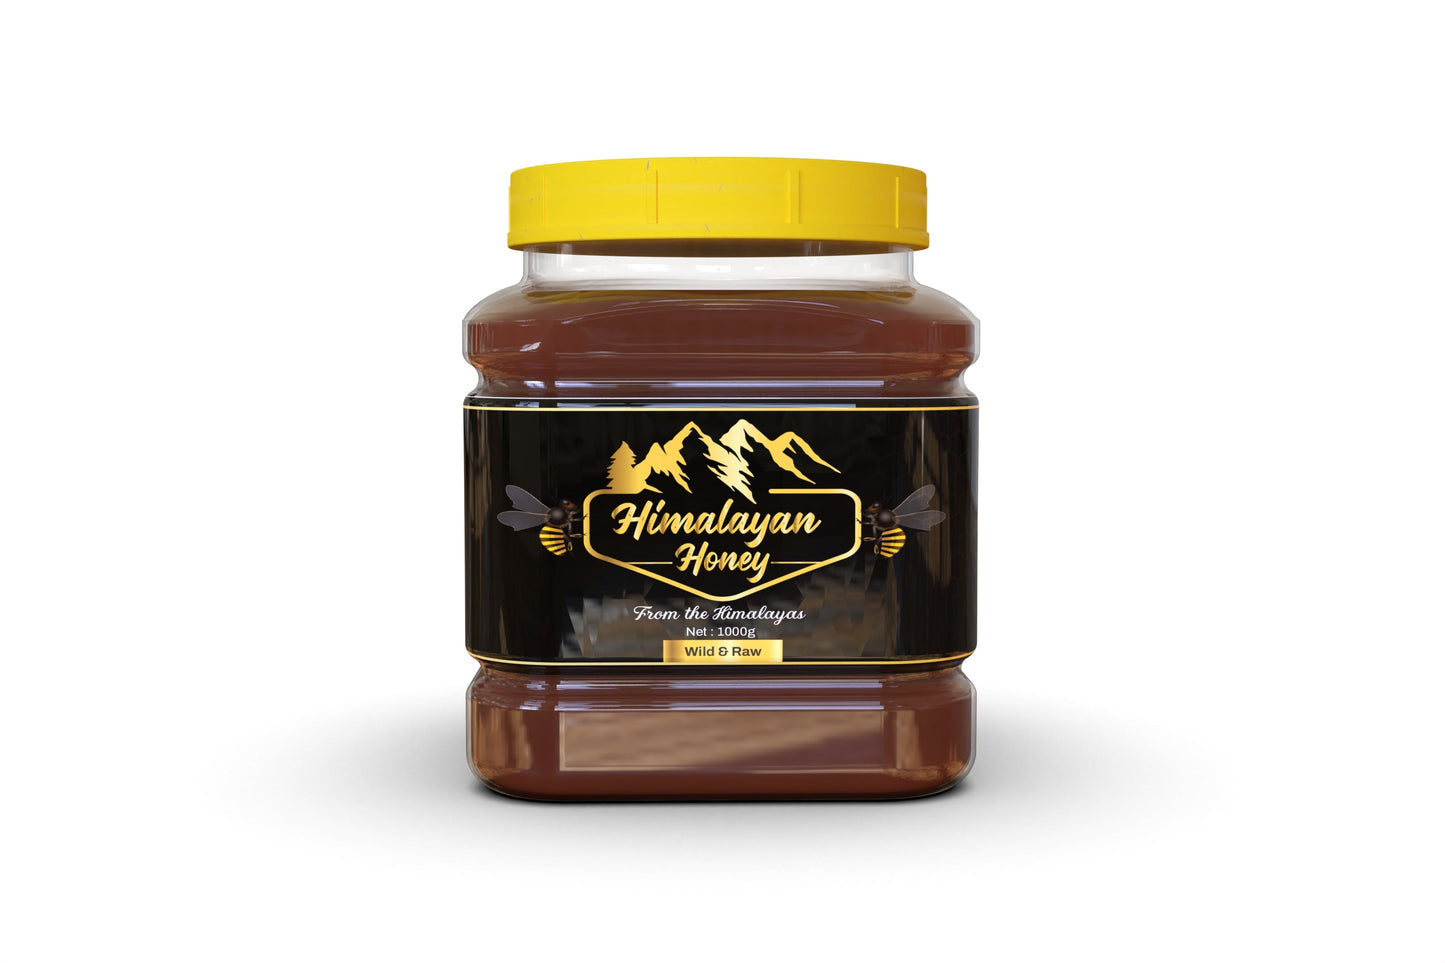 Mad Honey Himalayan premium 1000g Silver range Nepal